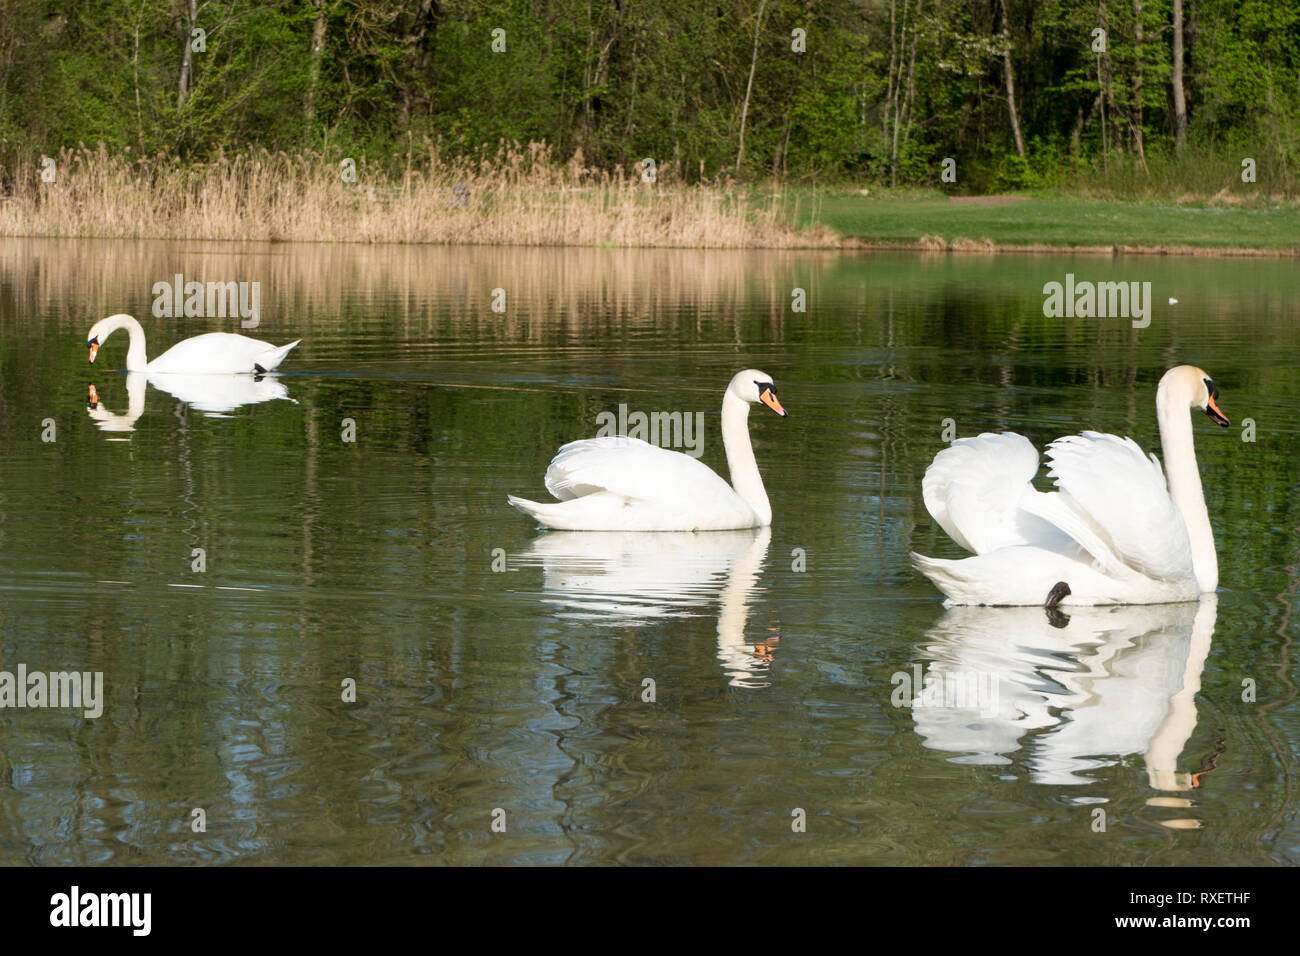 Three swans swimming on a lake Stock Photo